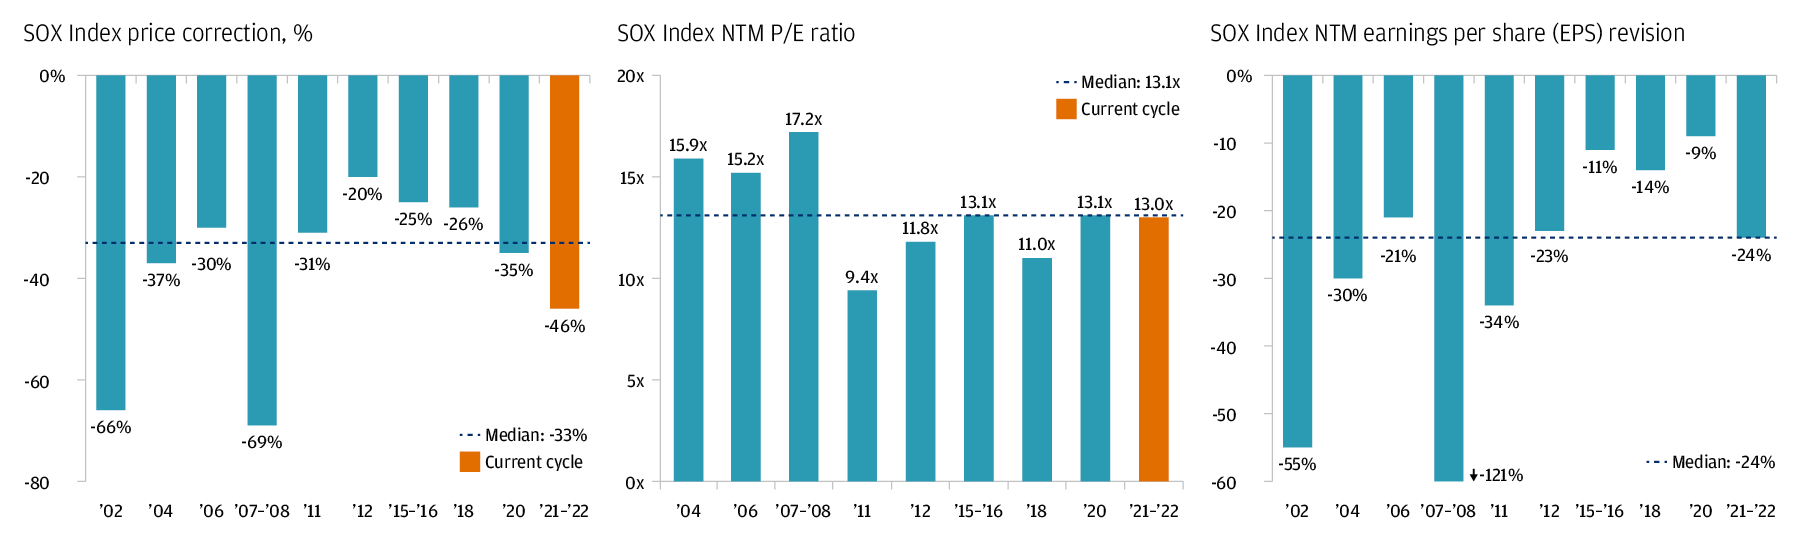 SOX index price correction, 2004–2022